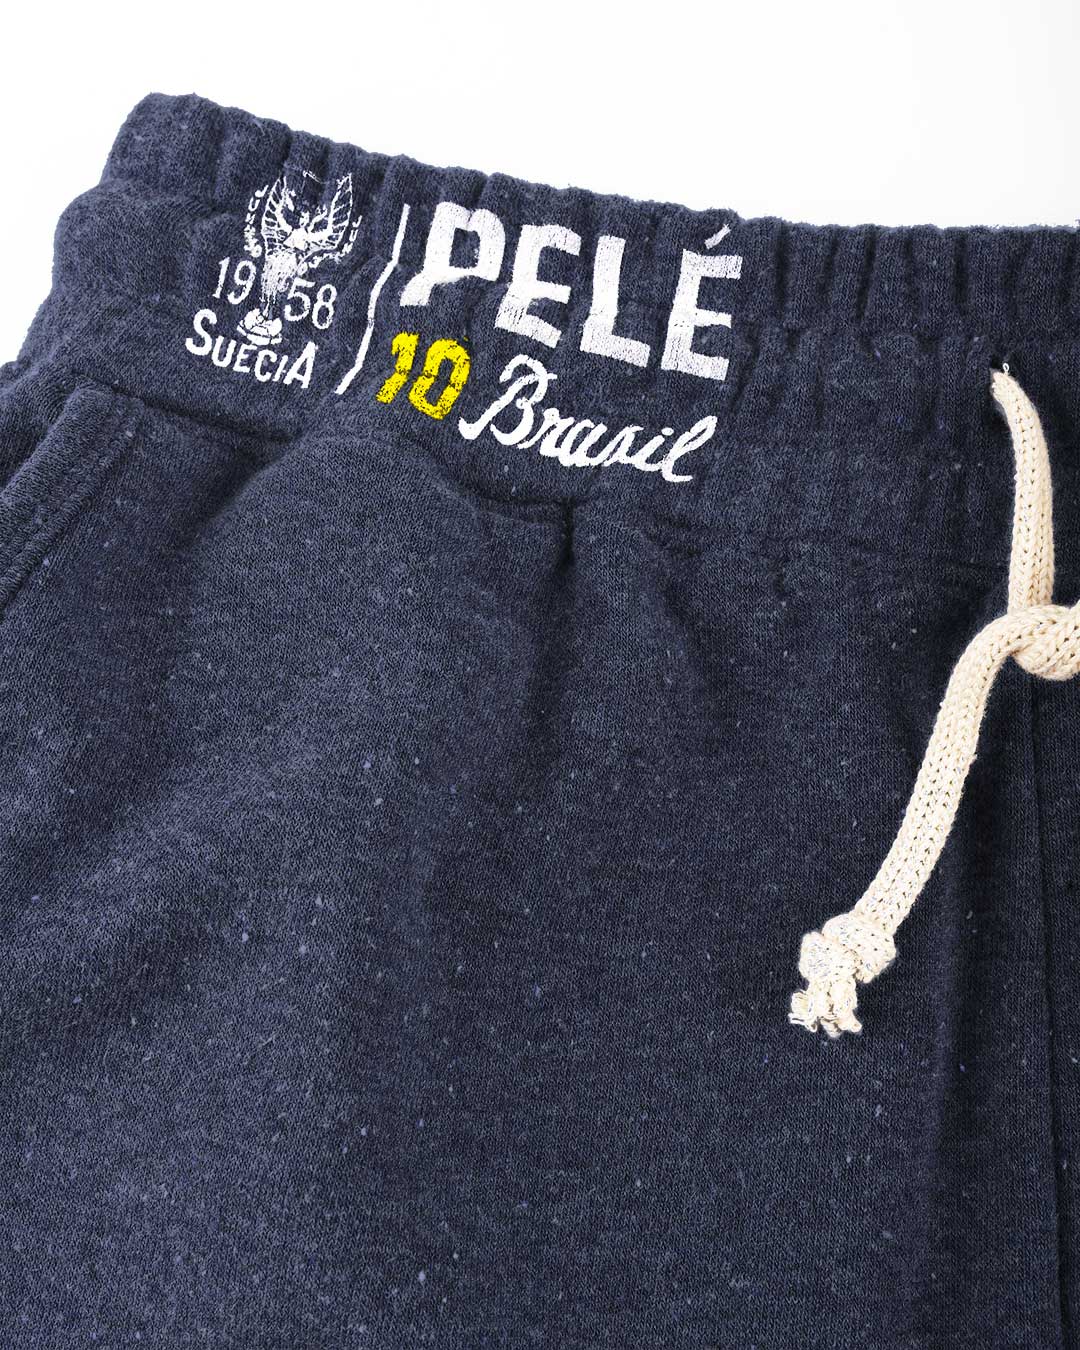 Pelé 1958 Brasil Navy Sweatpants - Roots of Fight